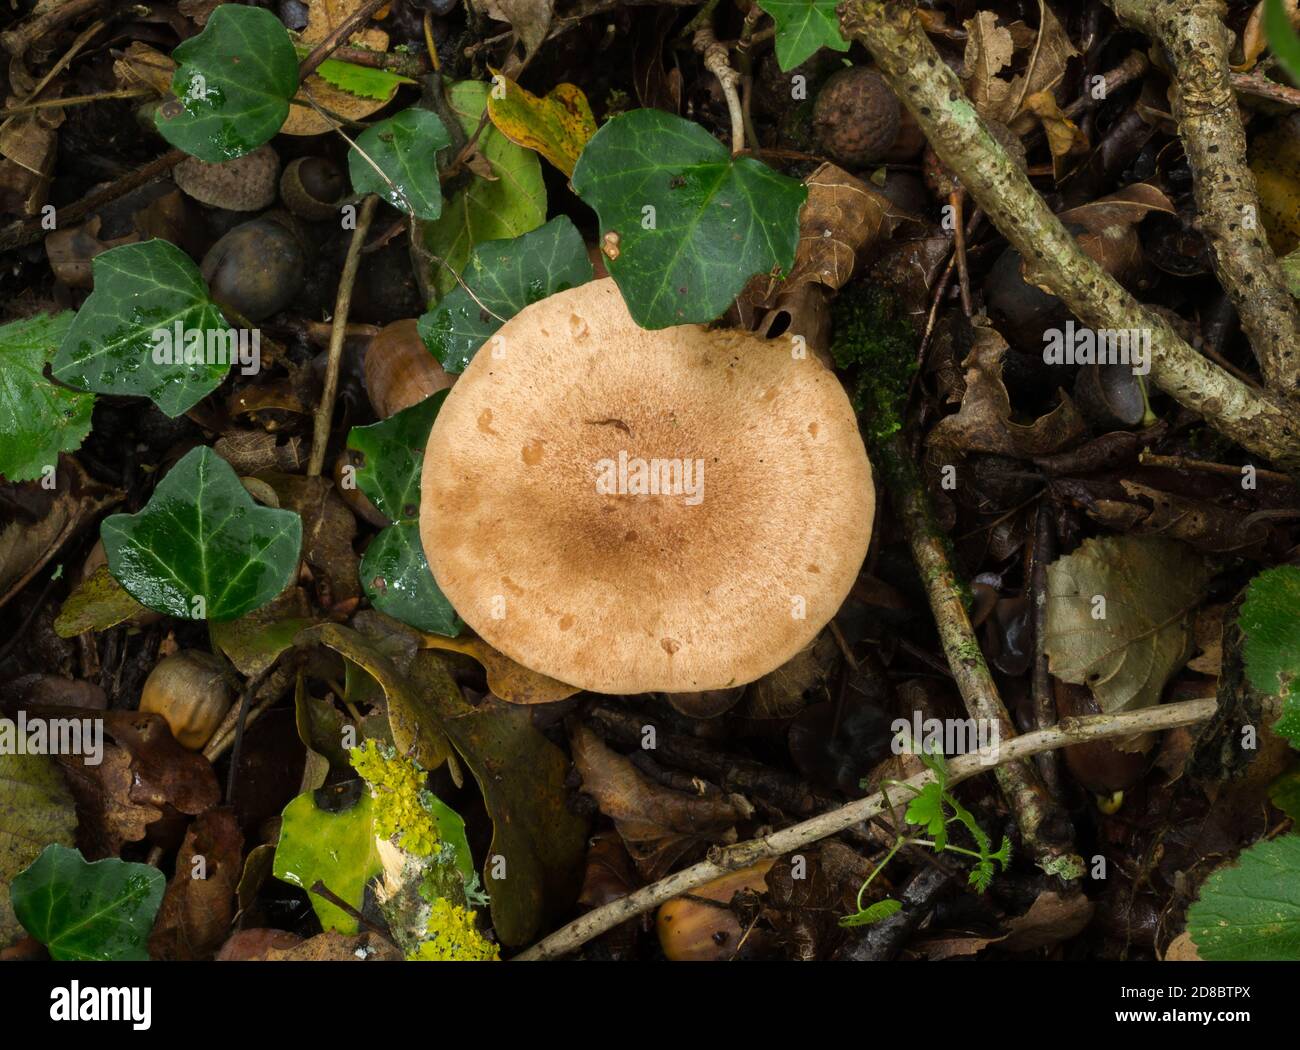 The oak milkcap mushroom or lactarius quietus growing nesr an oak tree. Stock Photo